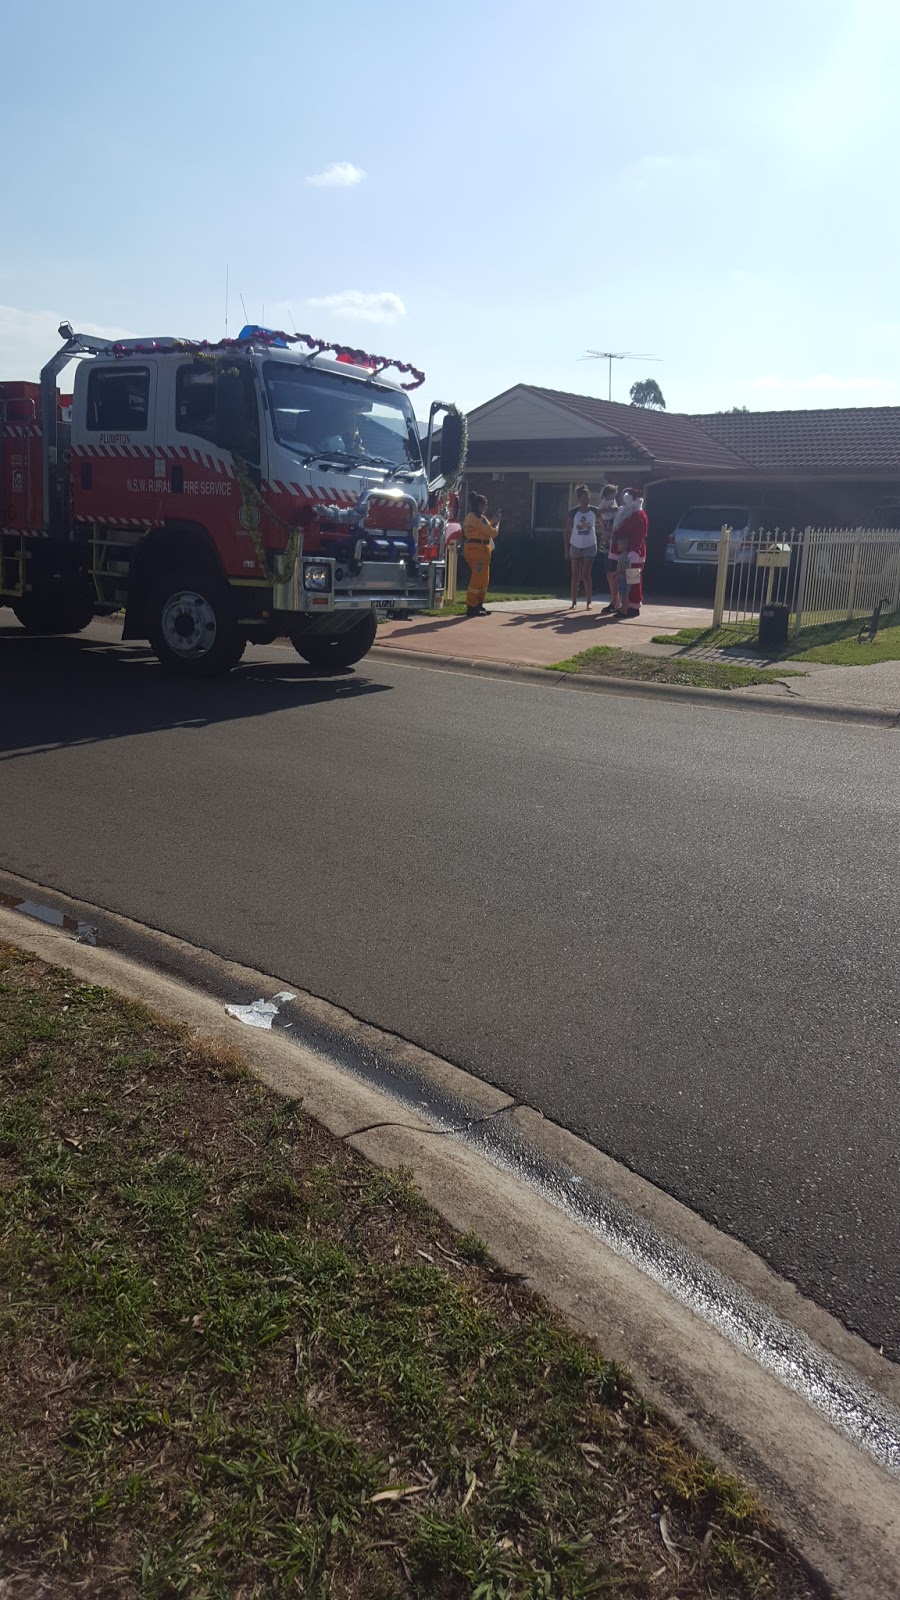 Plumpton Rural Fire Brigade | fire station | 1L Florence St, Oakhurst NSW 2761, Australia | 0298327620 OR +61 2 9832 7620